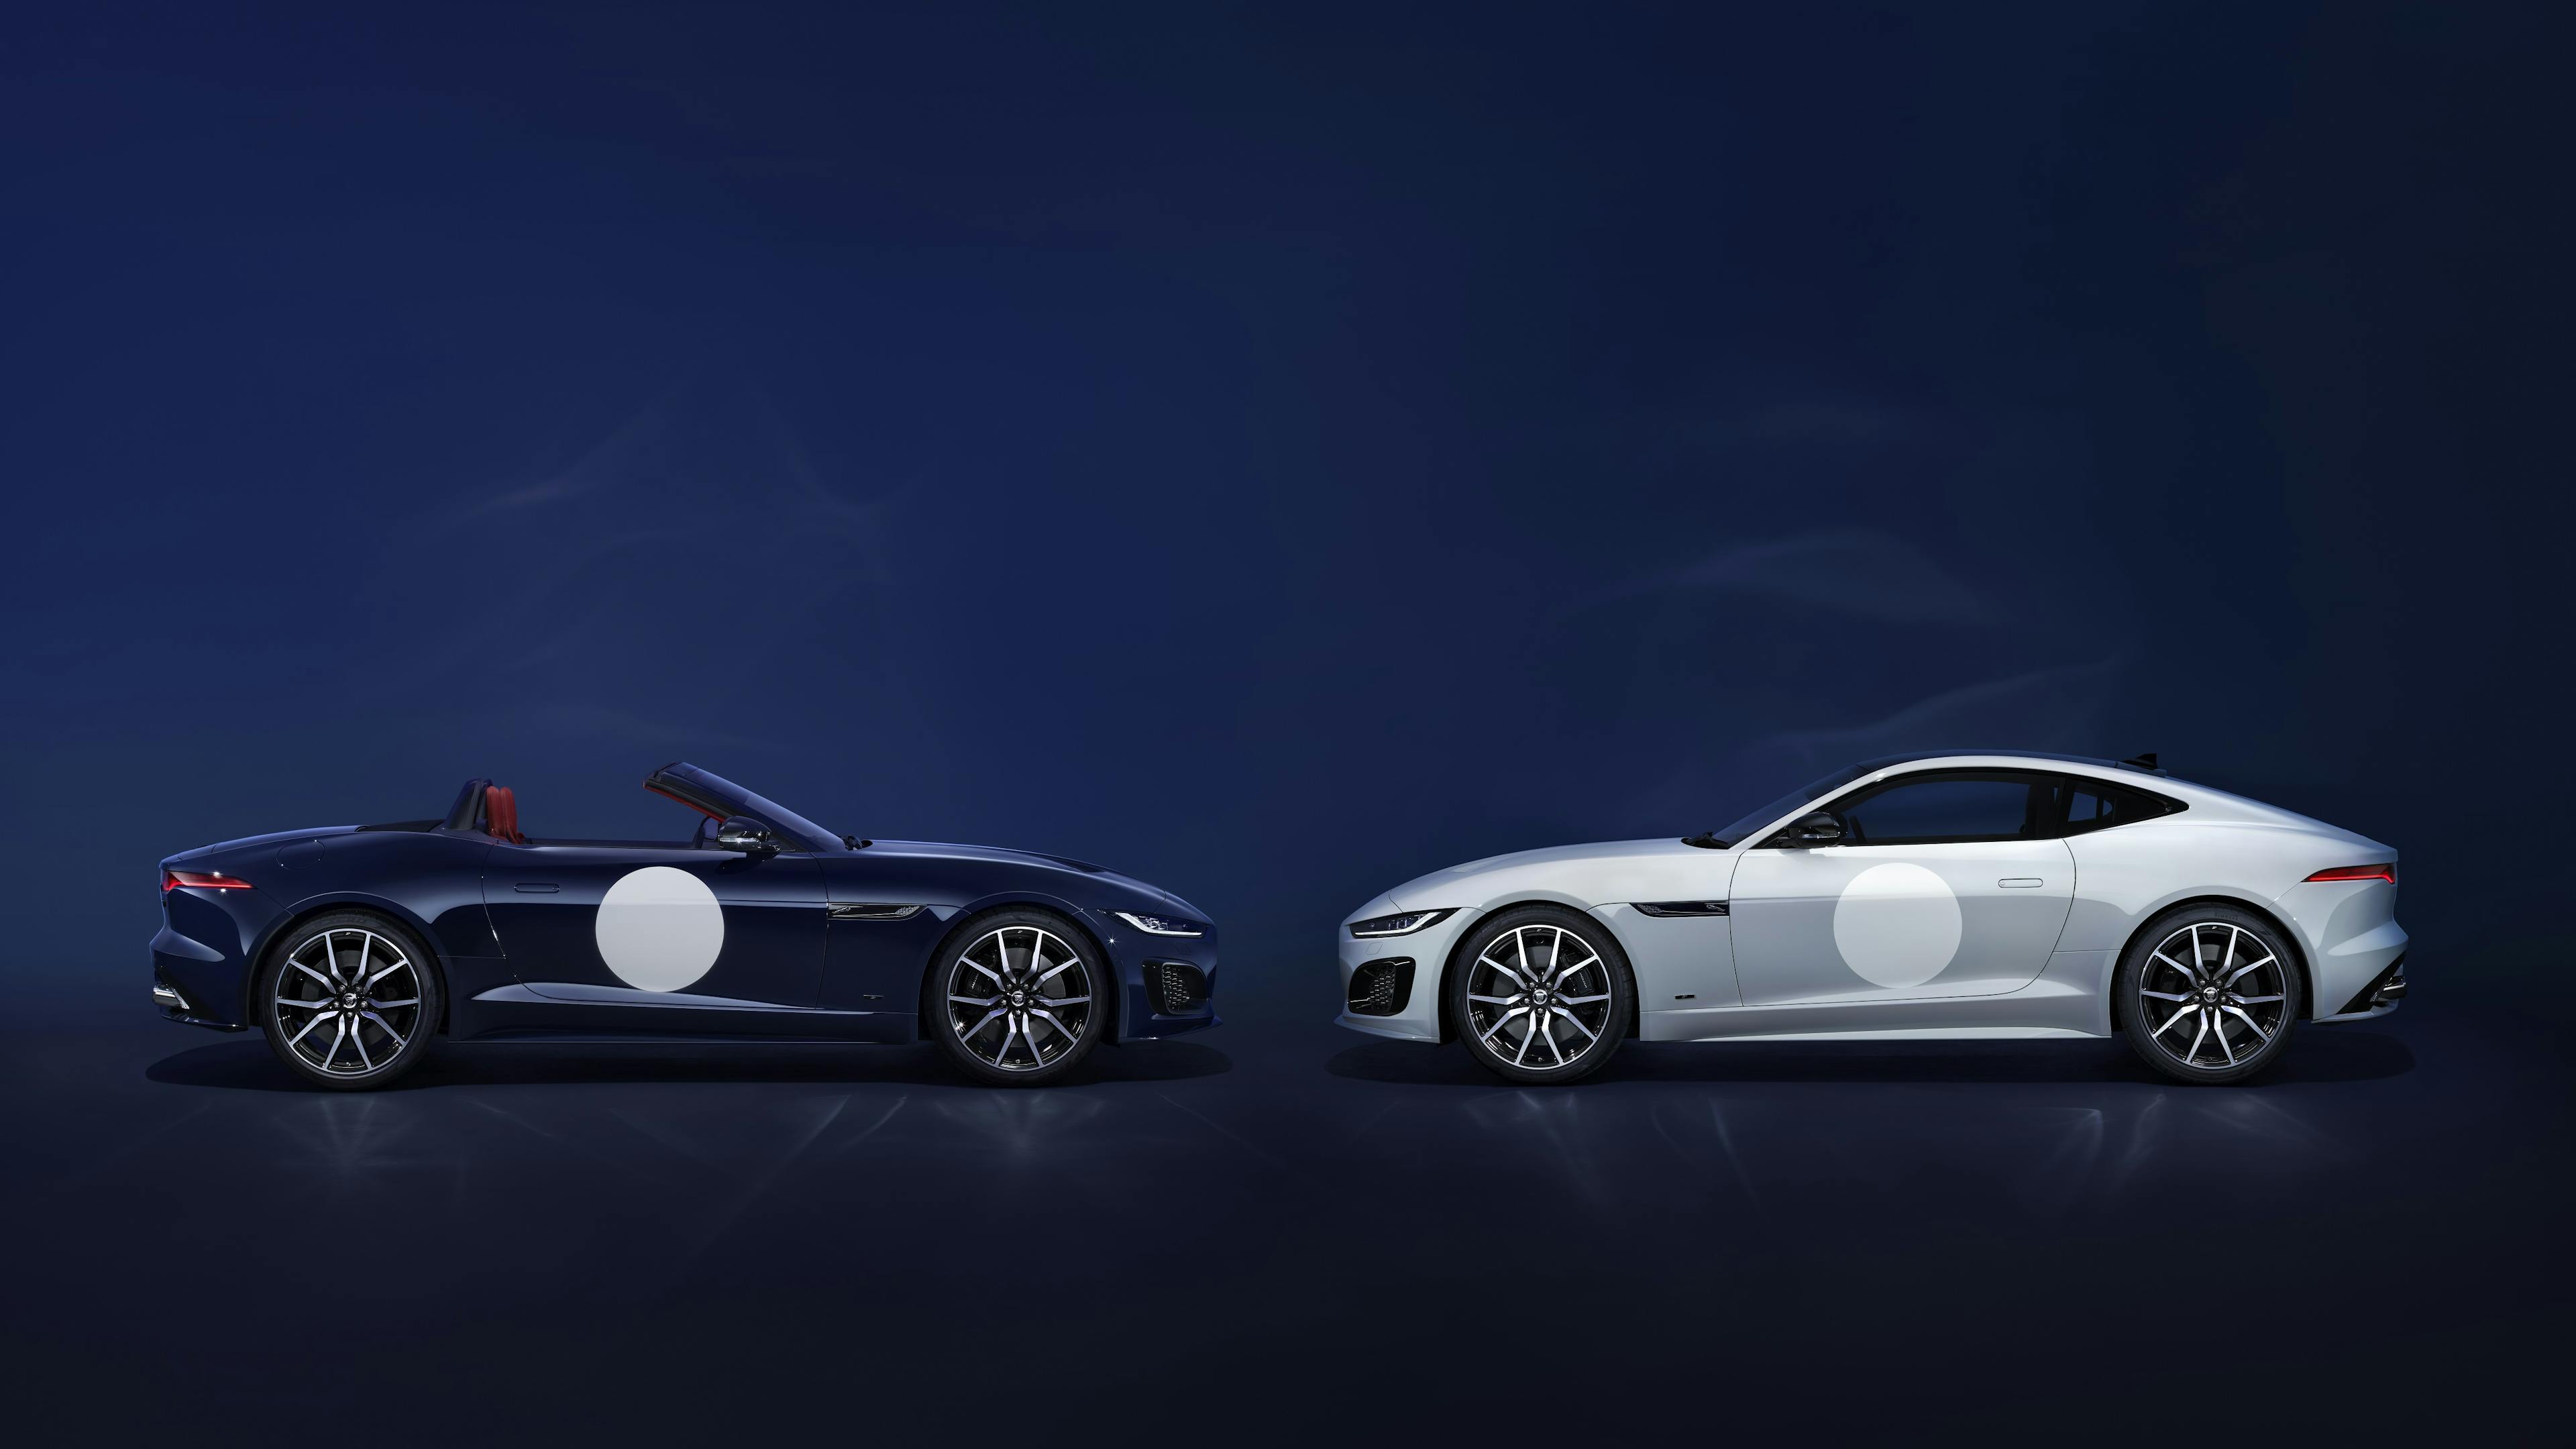 Modely Jaguar F-TYPE ZP Editions inšpirované pretekmi, ktoré vytvorila divízia SV Bespoke